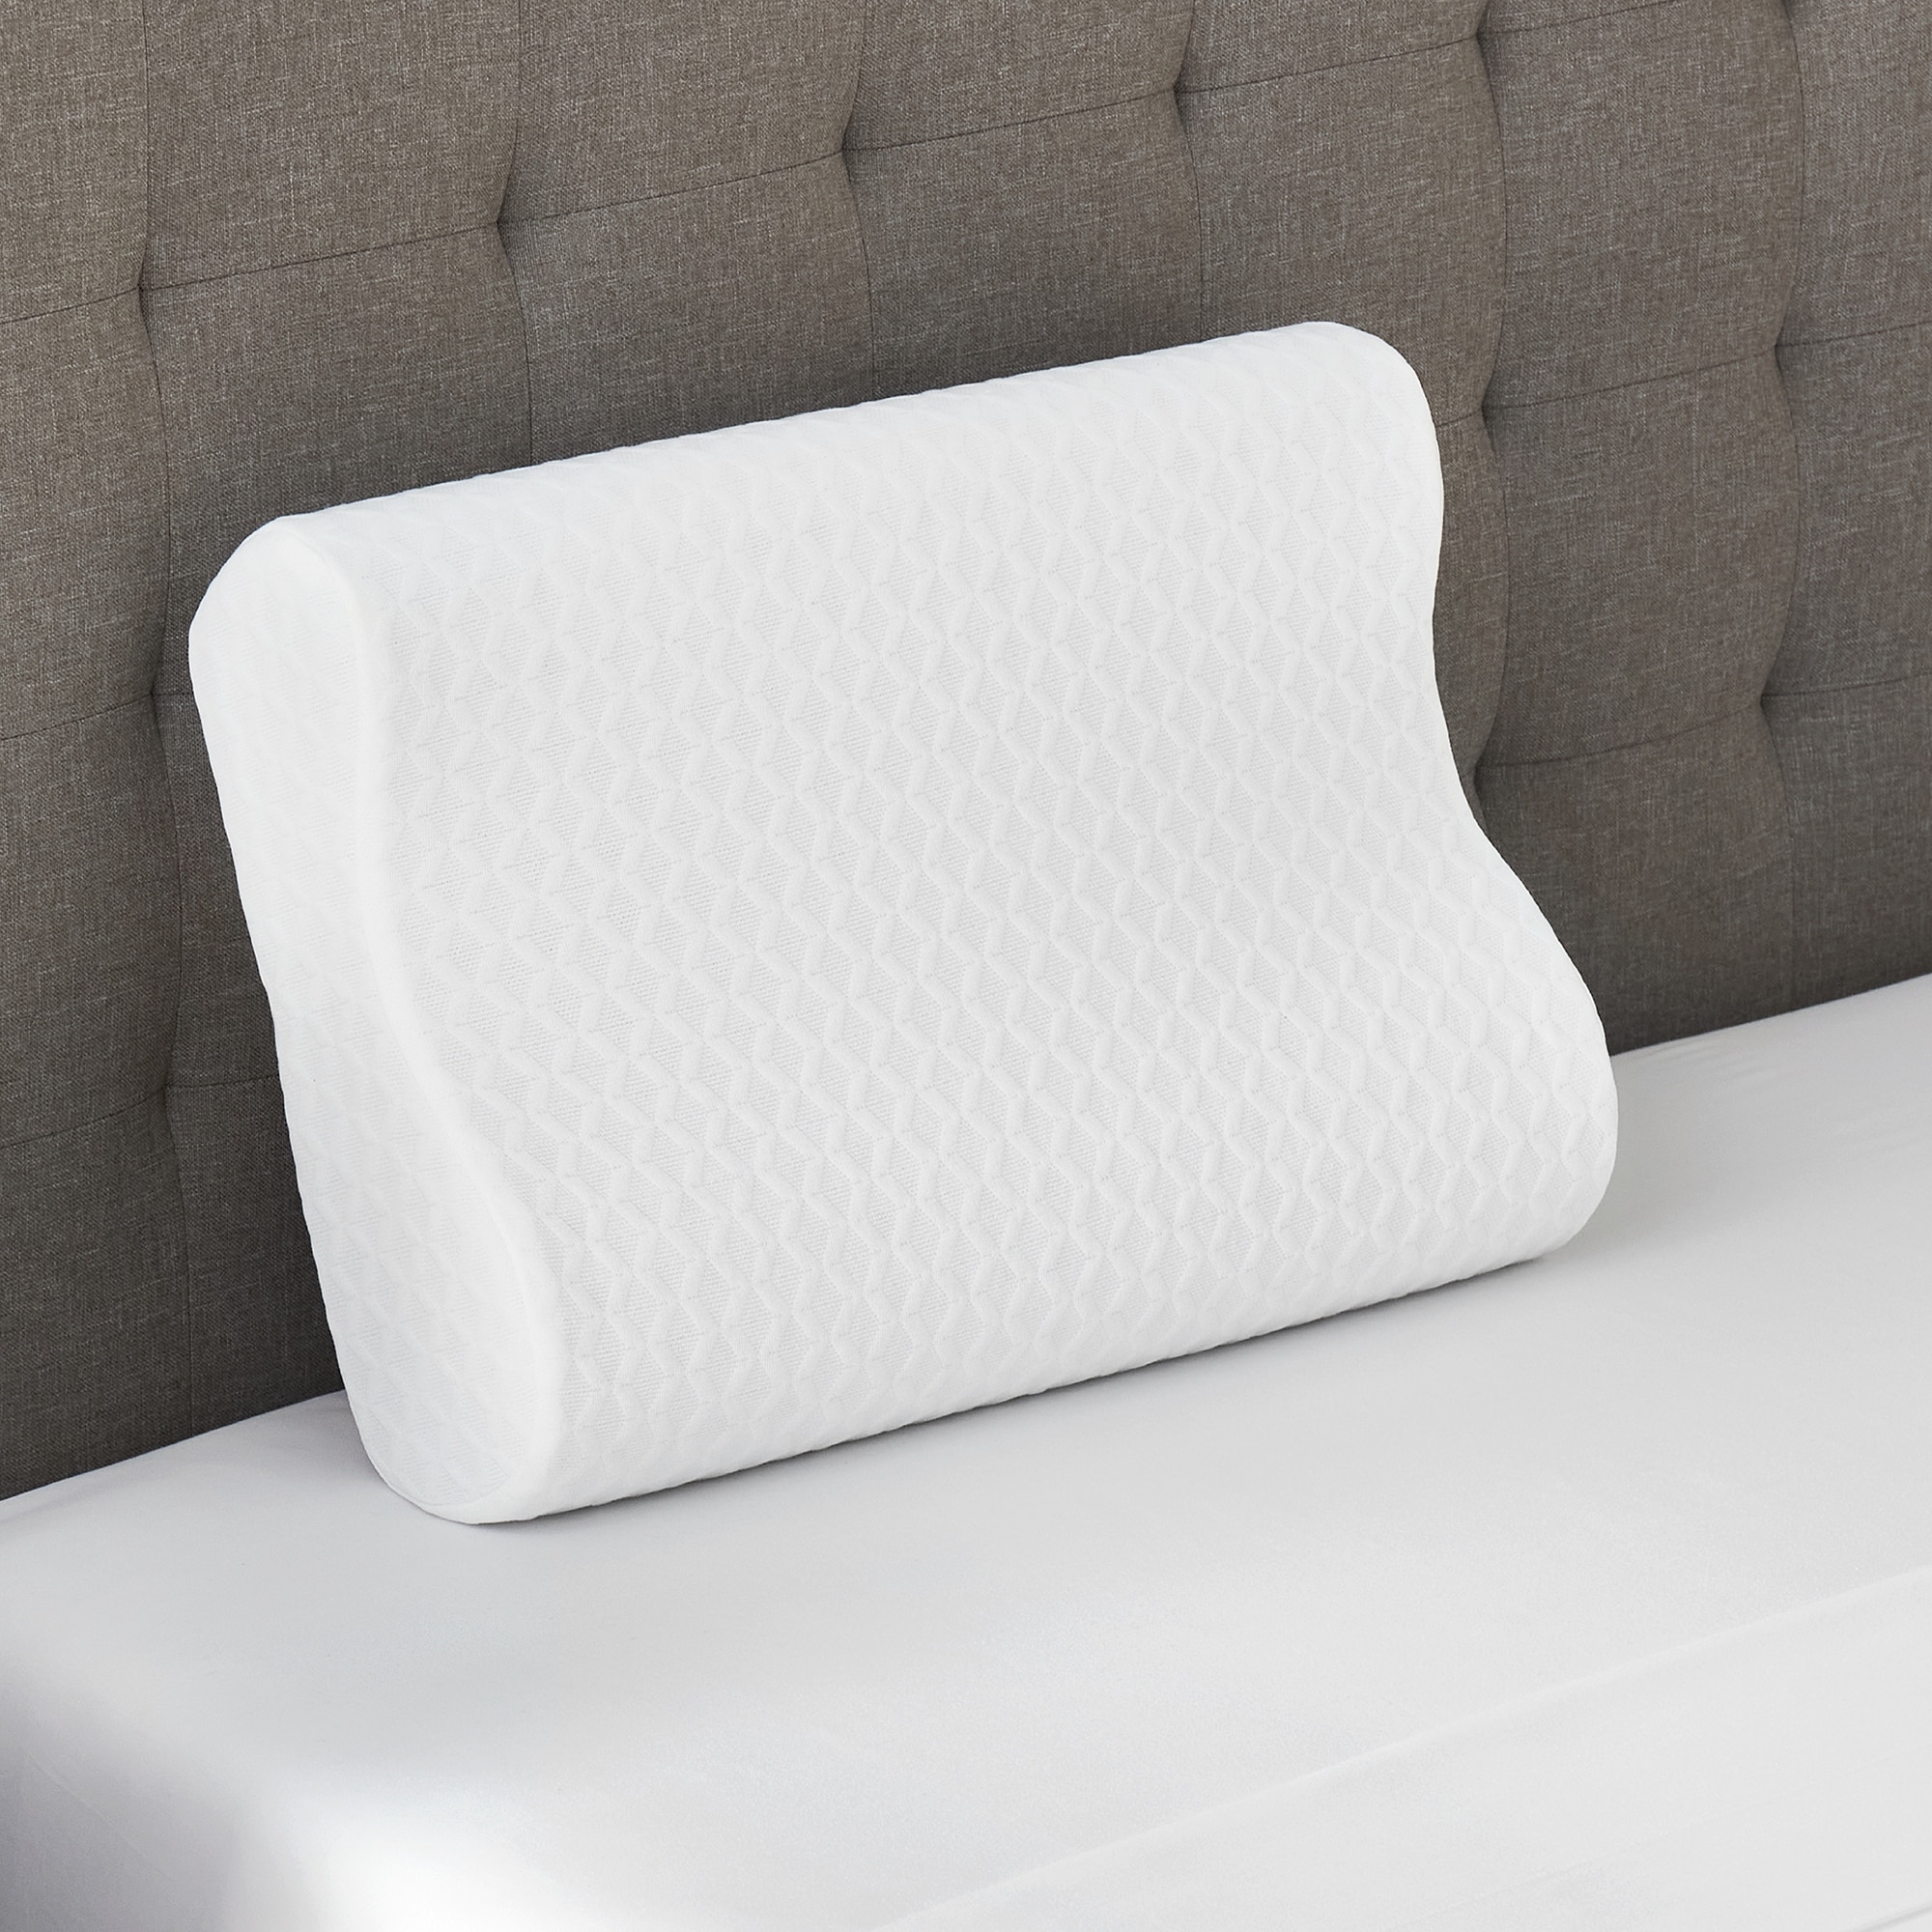 Bodipedic Classics Gel-Infused Contour Memory Foam Bed Pillow